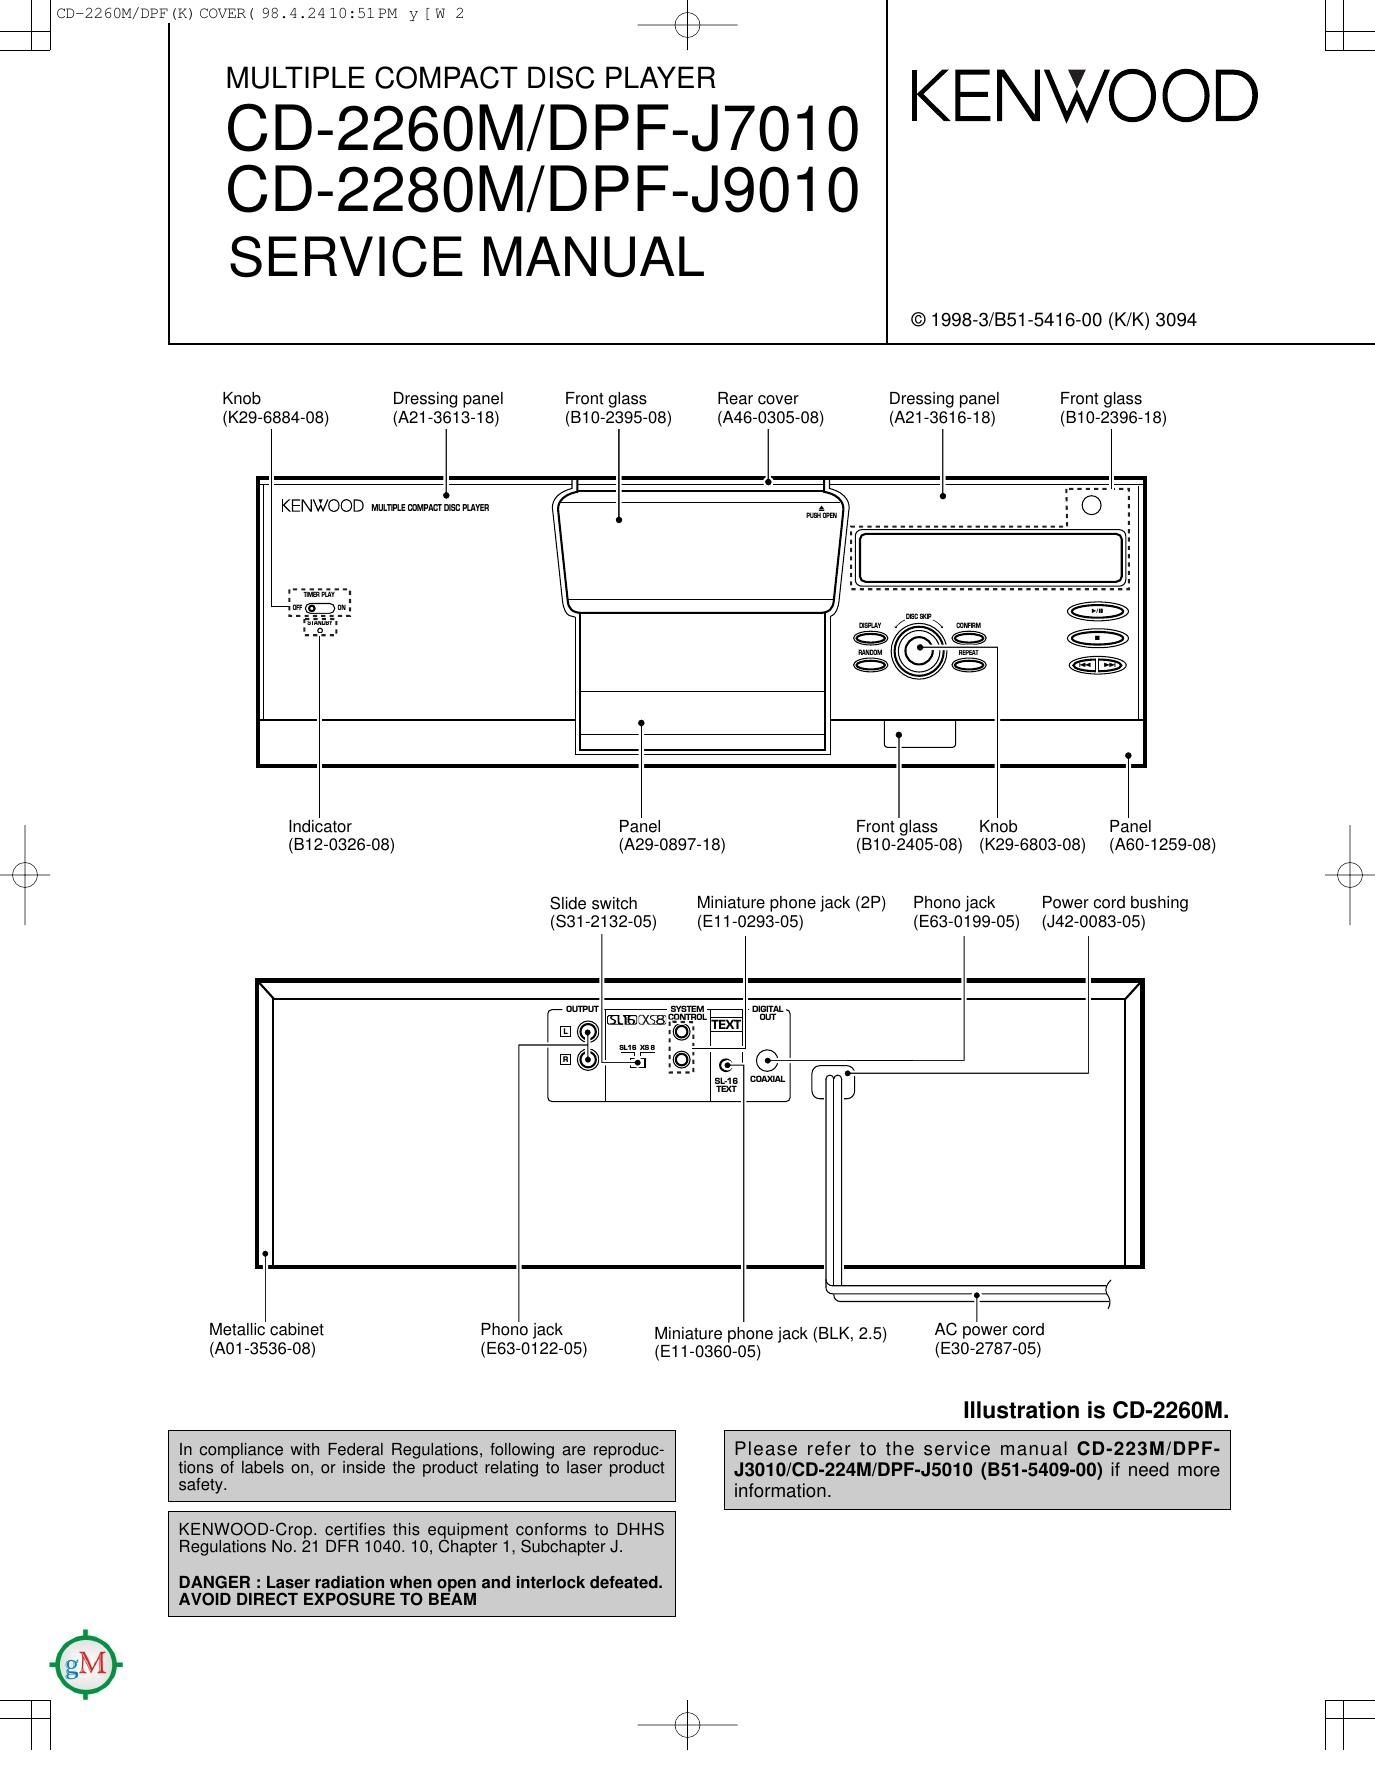 Kenwood DPFJ 9010 Service Manual